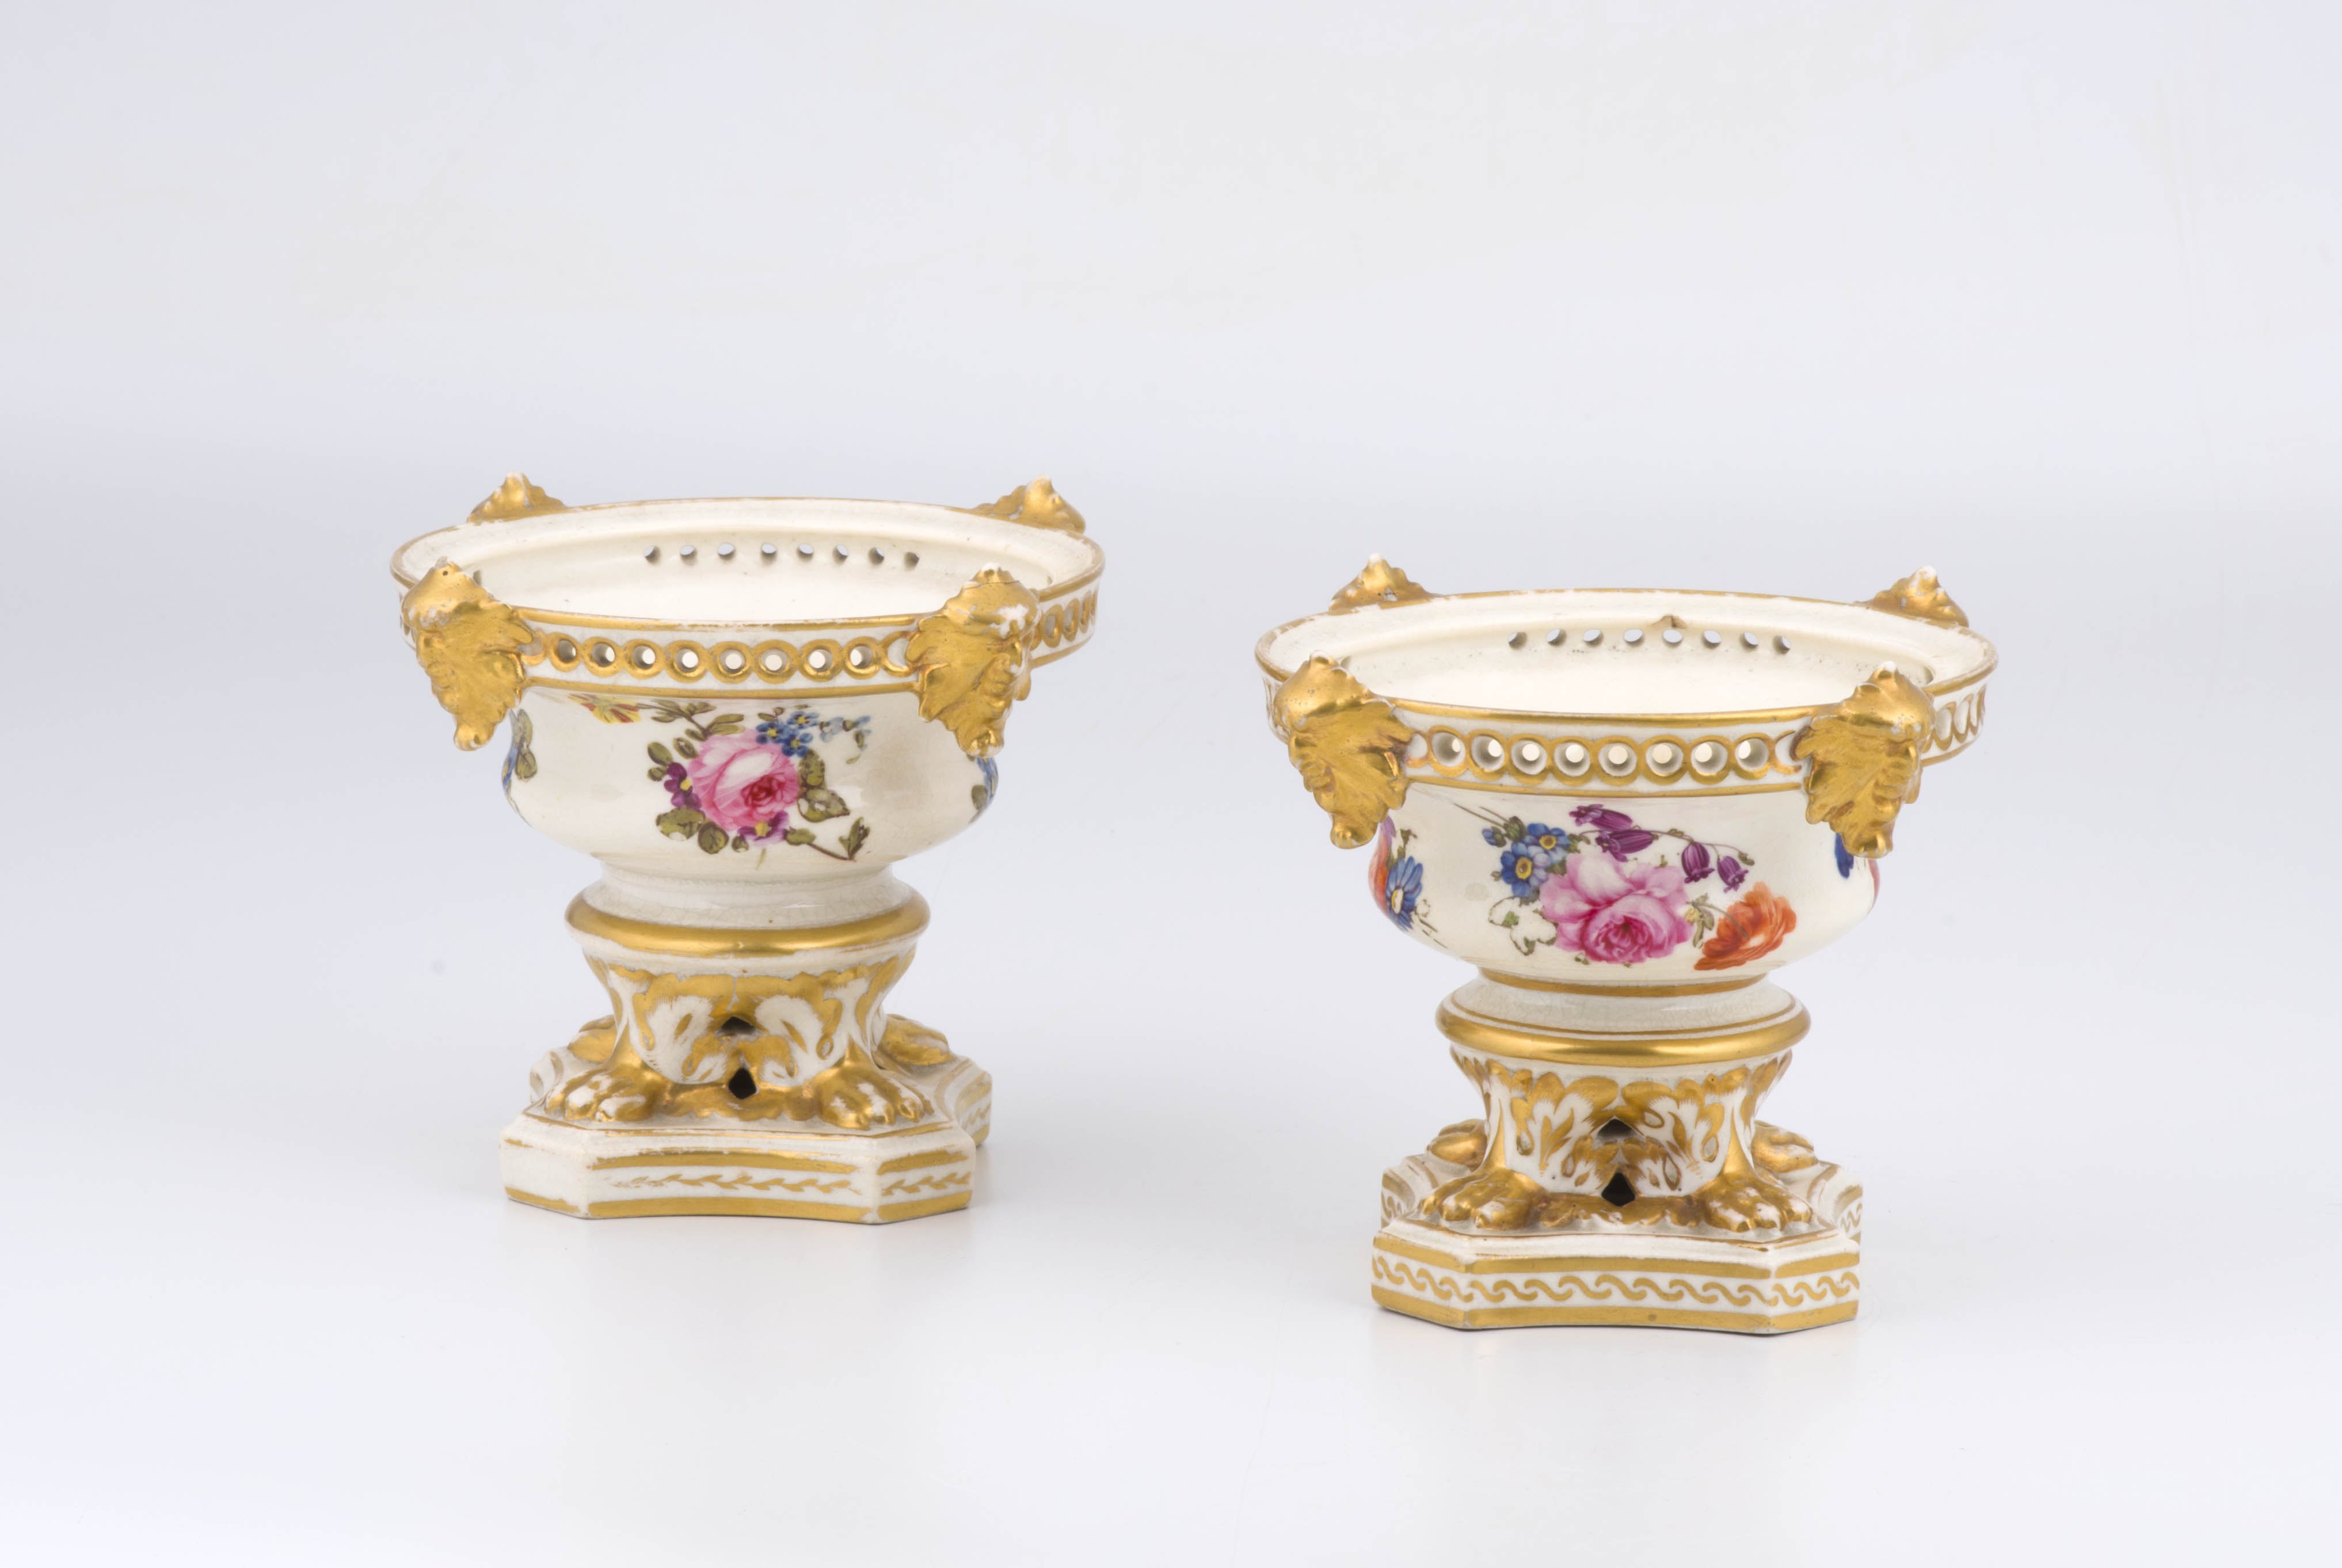 A pair of Derby porcelain potpourri stands, first quarter 19th century